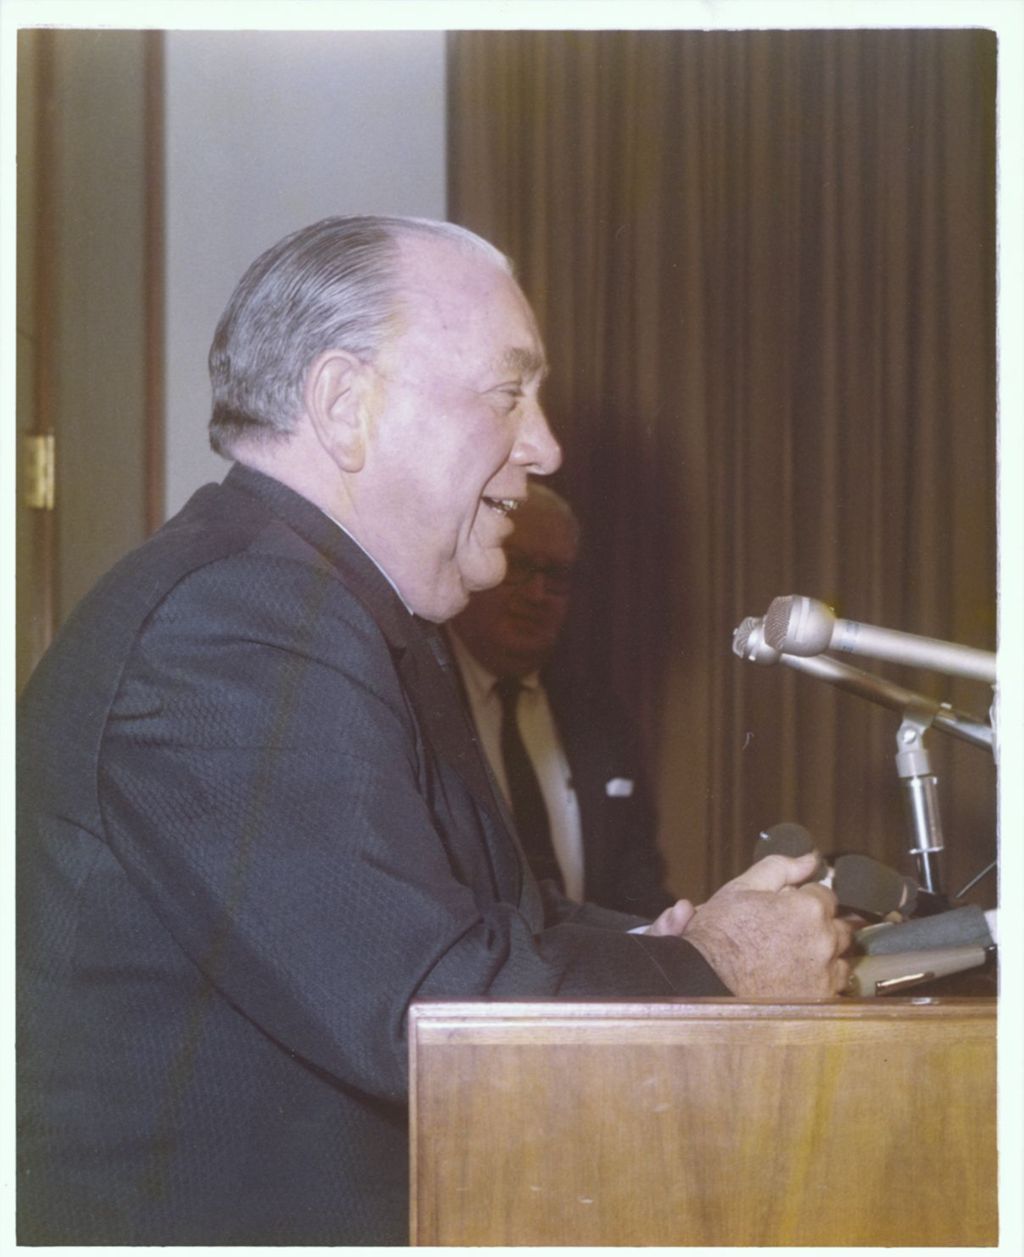 Miniature of Richard J. Daley at a podium